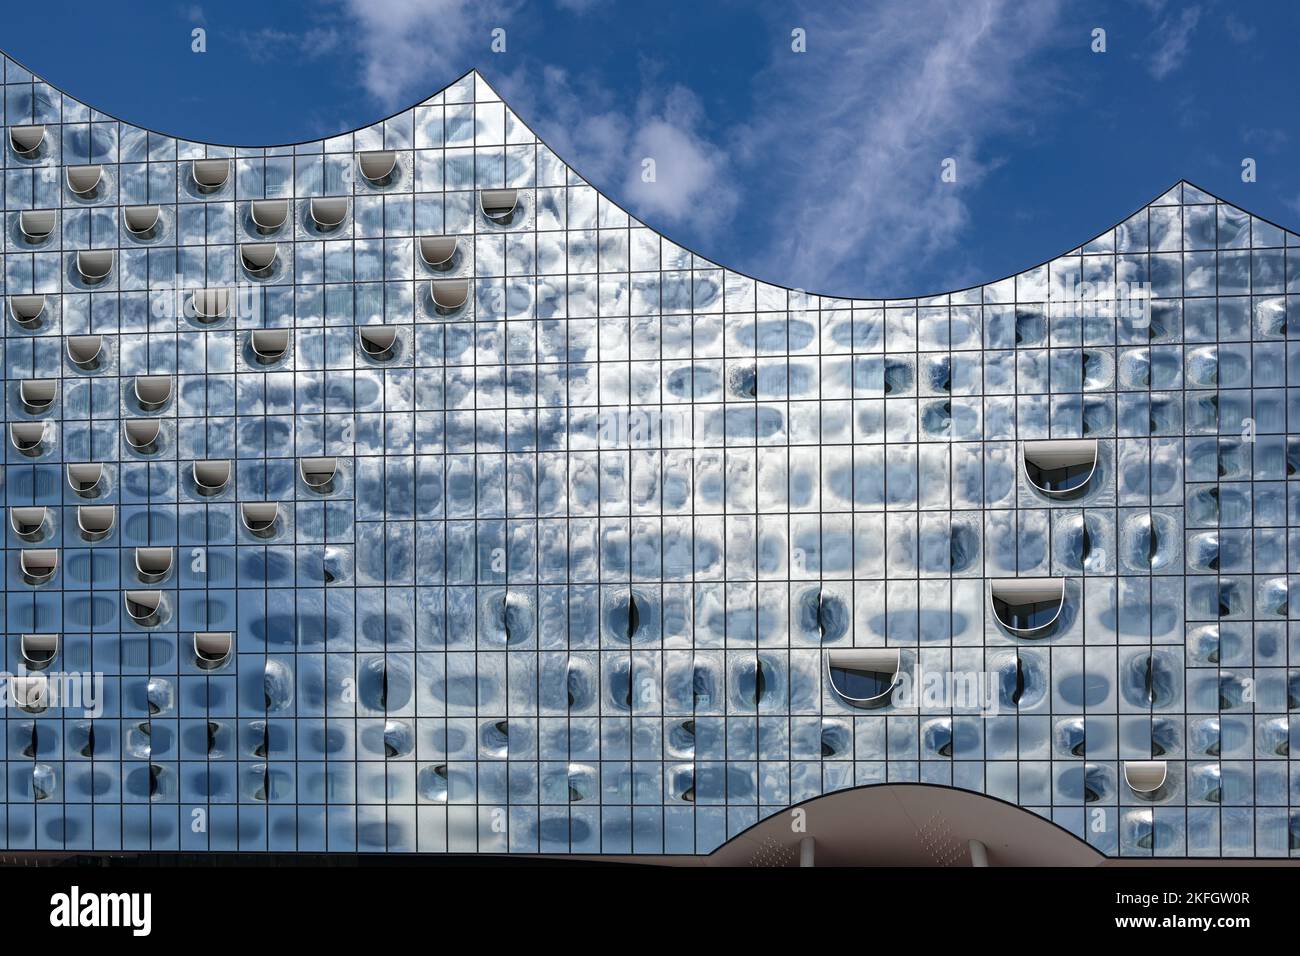 Elbphilharmonie, part of the glass facade, Hamburg concert hall, modern architecture in the historic warehouse city, landmark and tourist destination Stock Photo